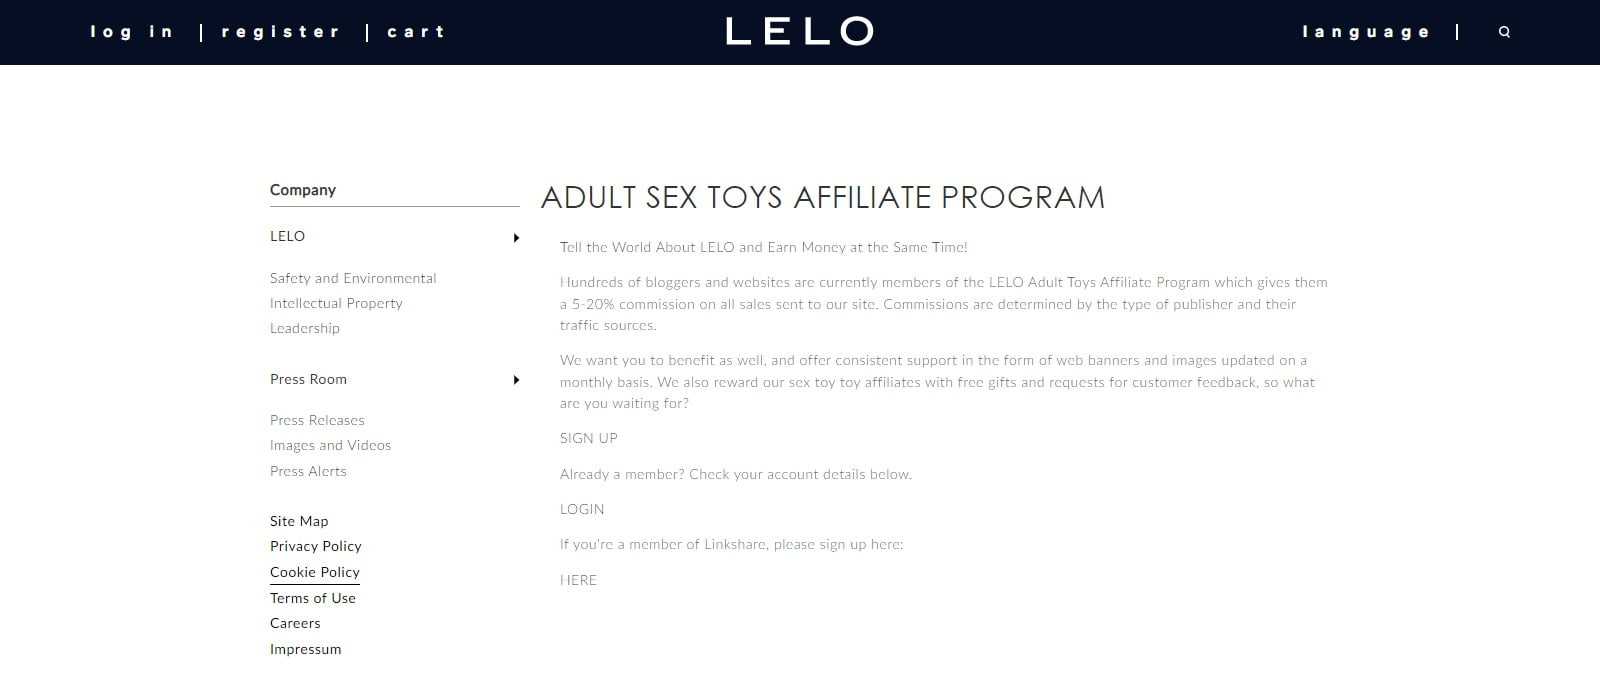 LELO Affiliates Program Review: 5% - 20% Commission on all Sales